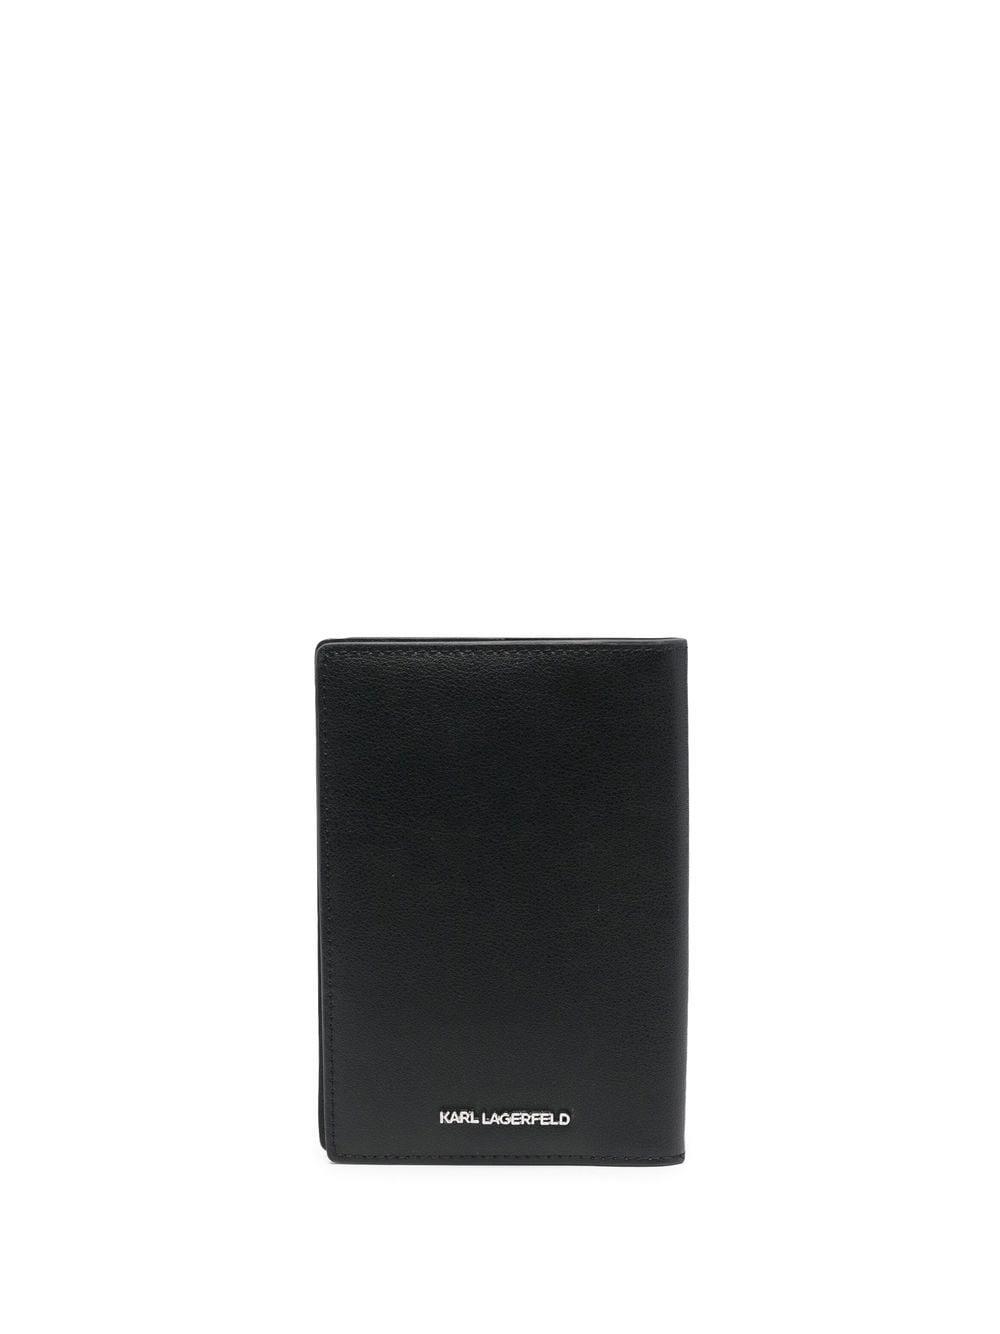 Karl Lagerfeld Ikonik 2.0 leather passport case - Black